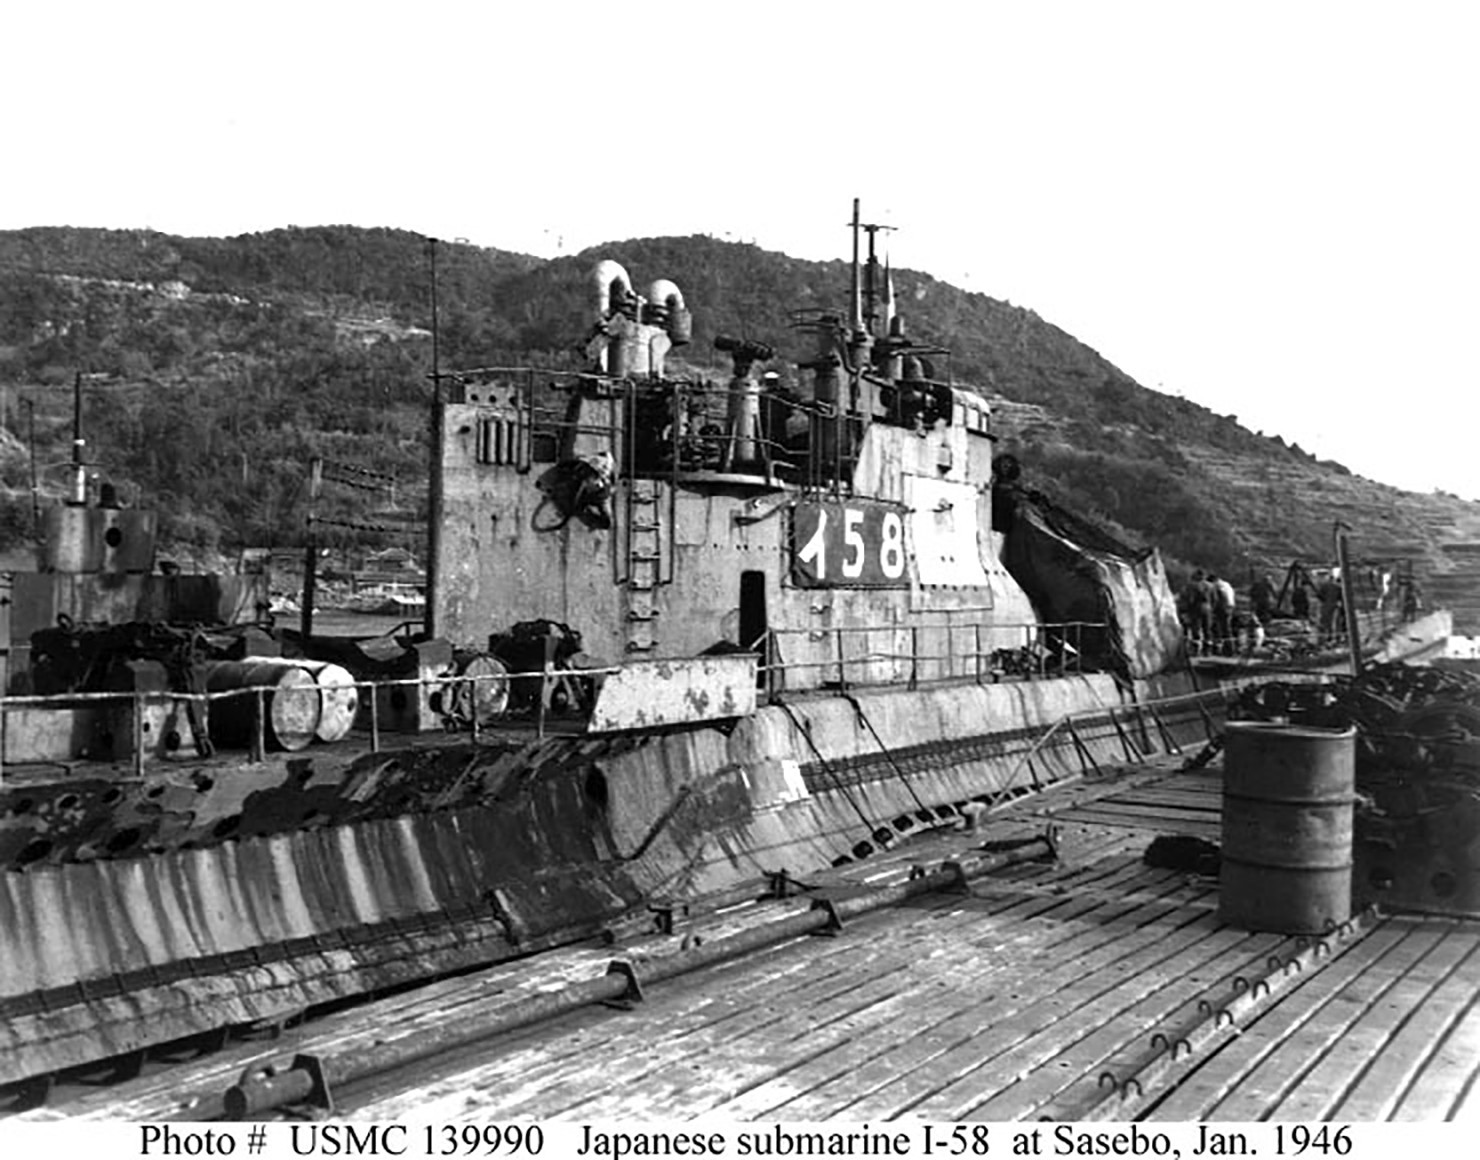 The I-58 submarine at Sasebo in 1946. Photo: National Archives